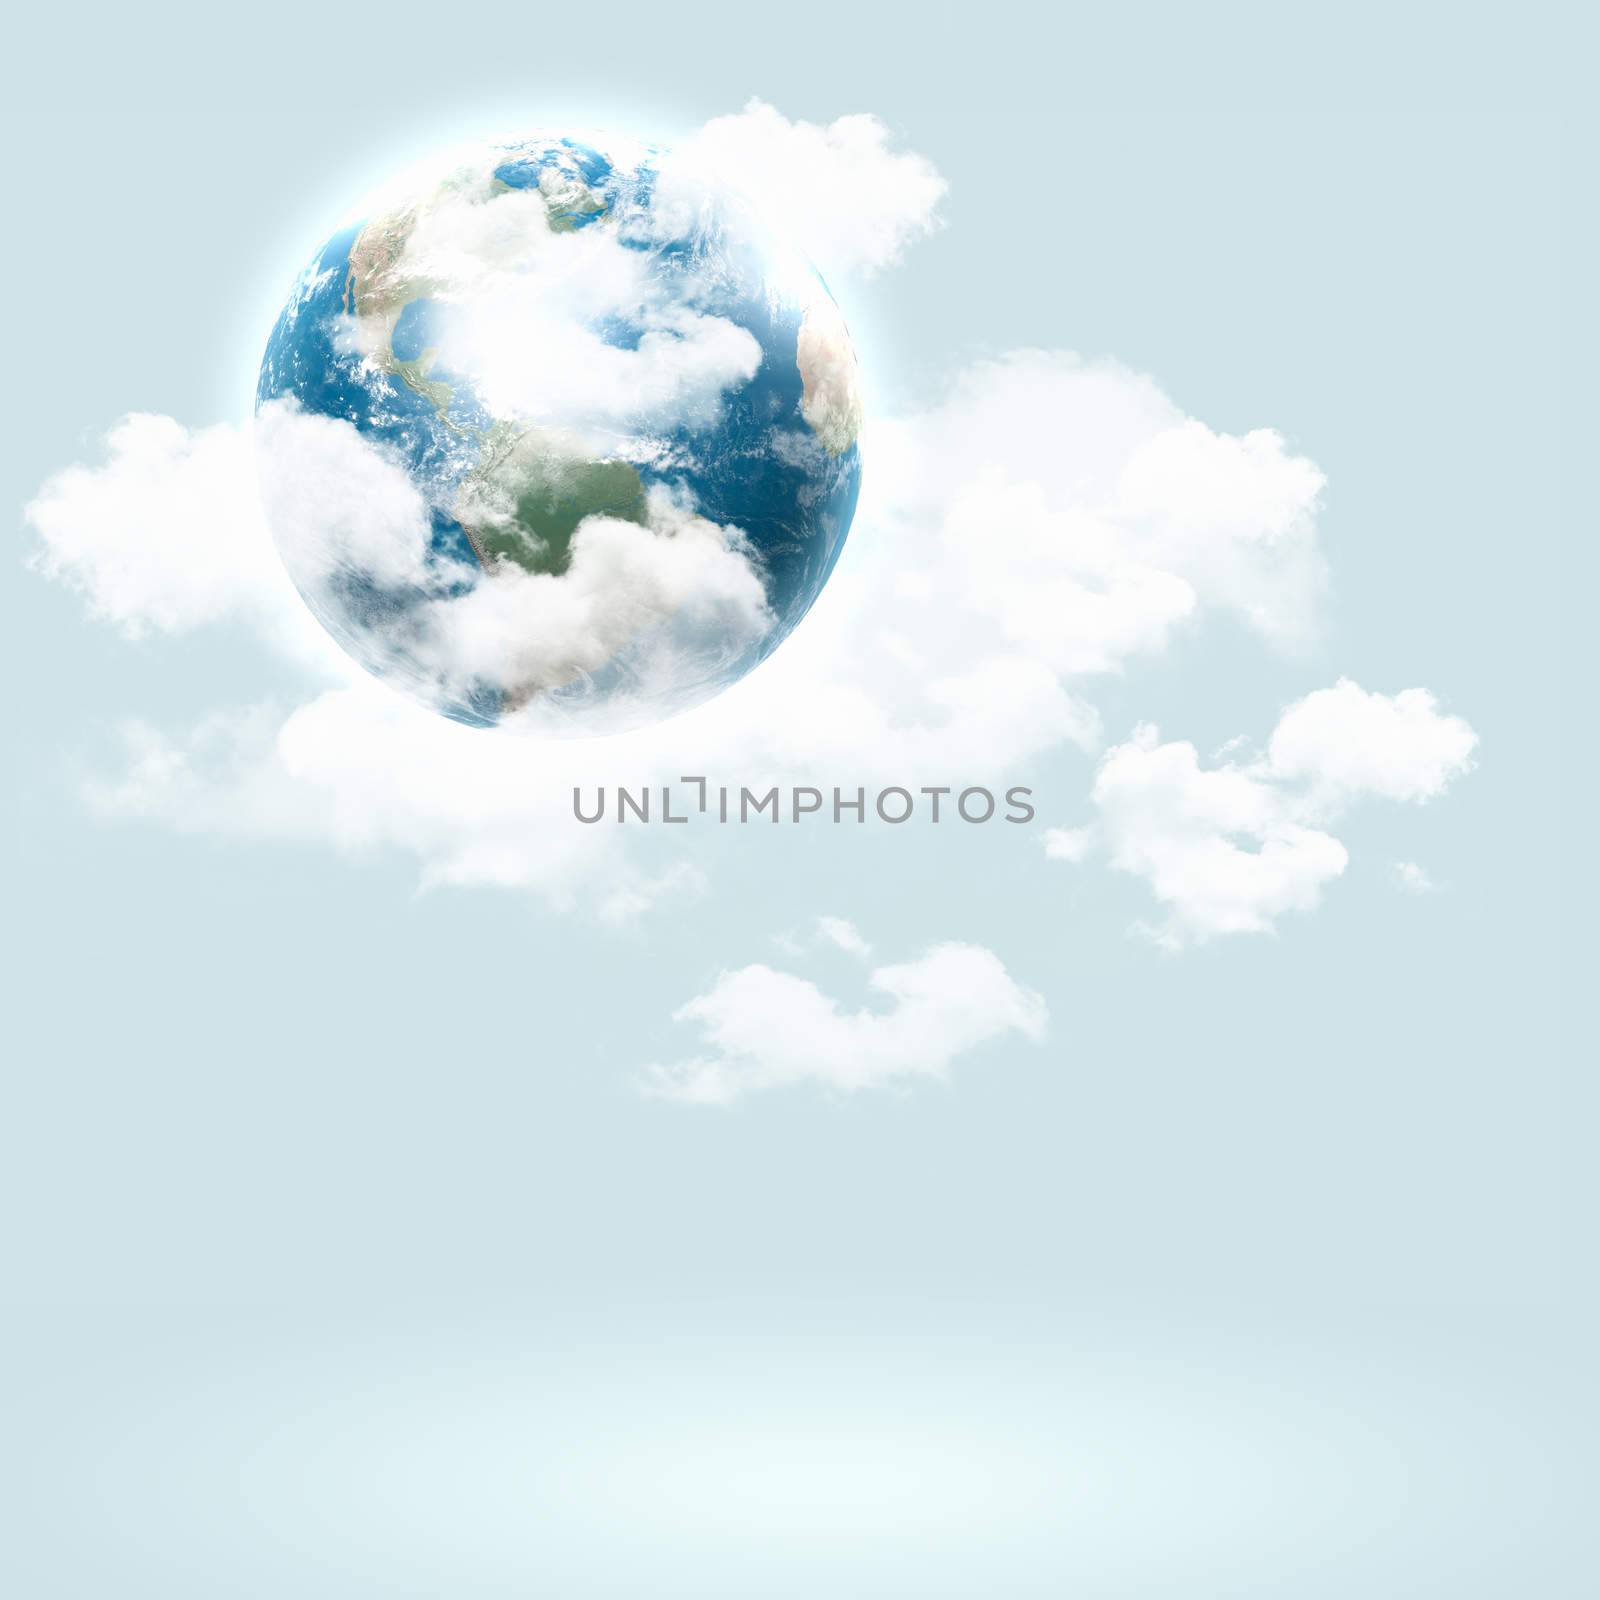 Background image with globe illustration. Globalization concept.